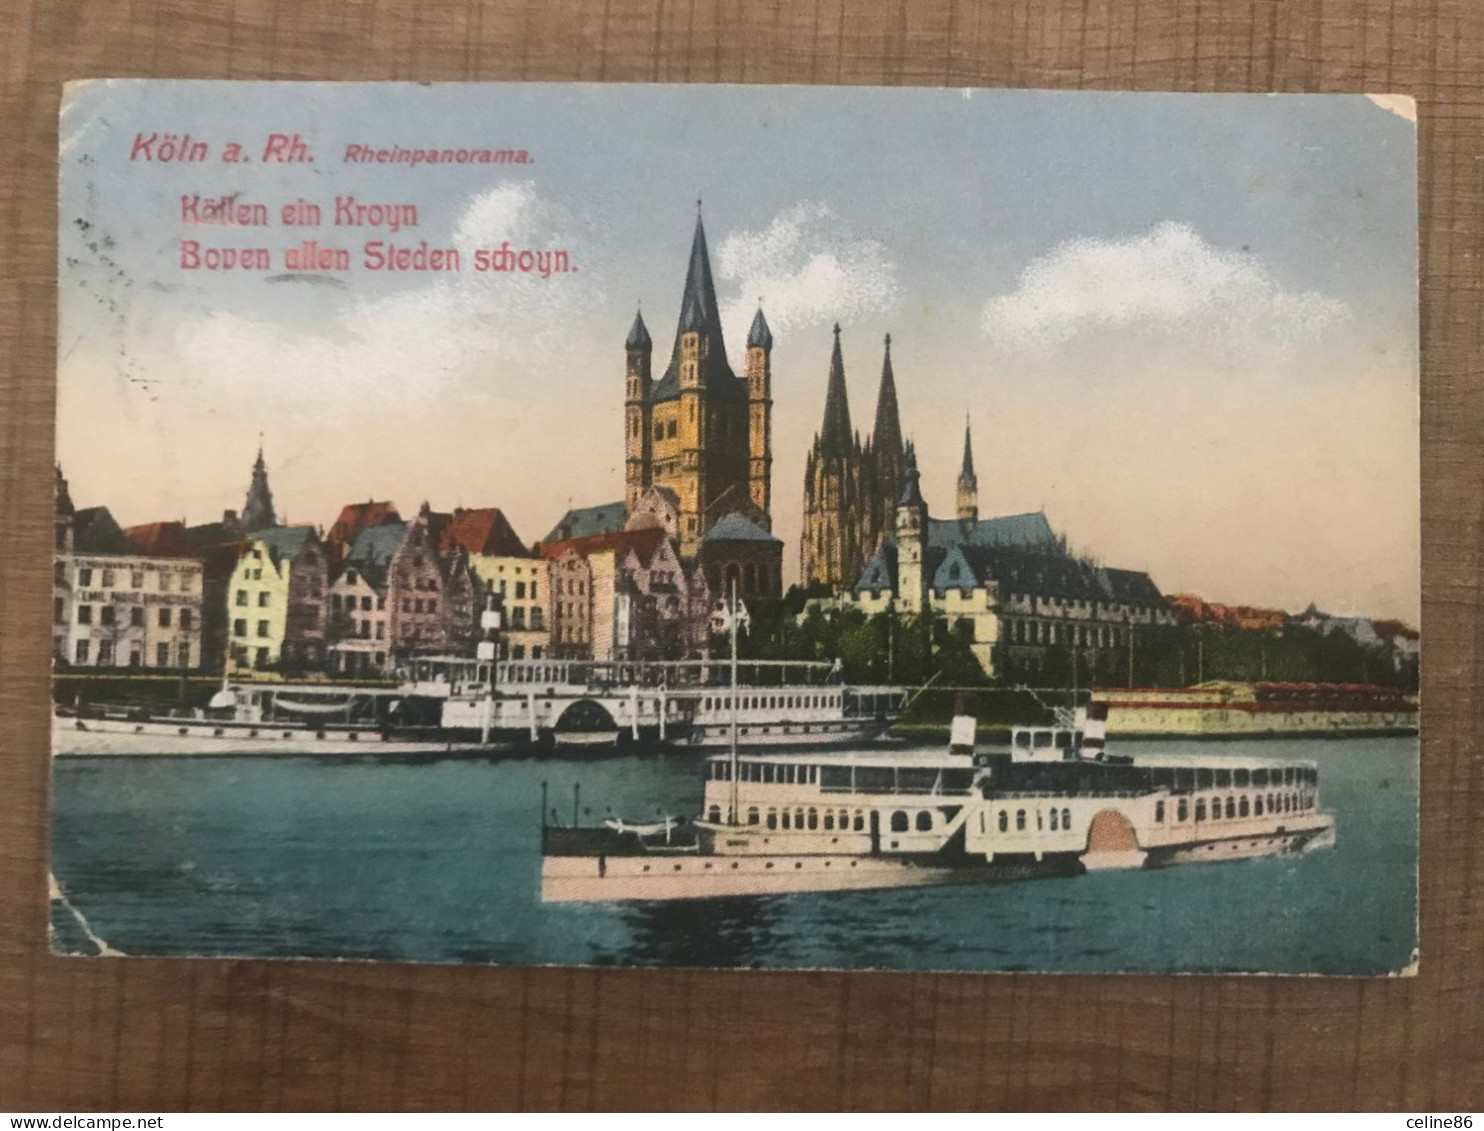  Köln A. Rh. Rheinpanorama Köllen Ein Kroyn  - Koeln